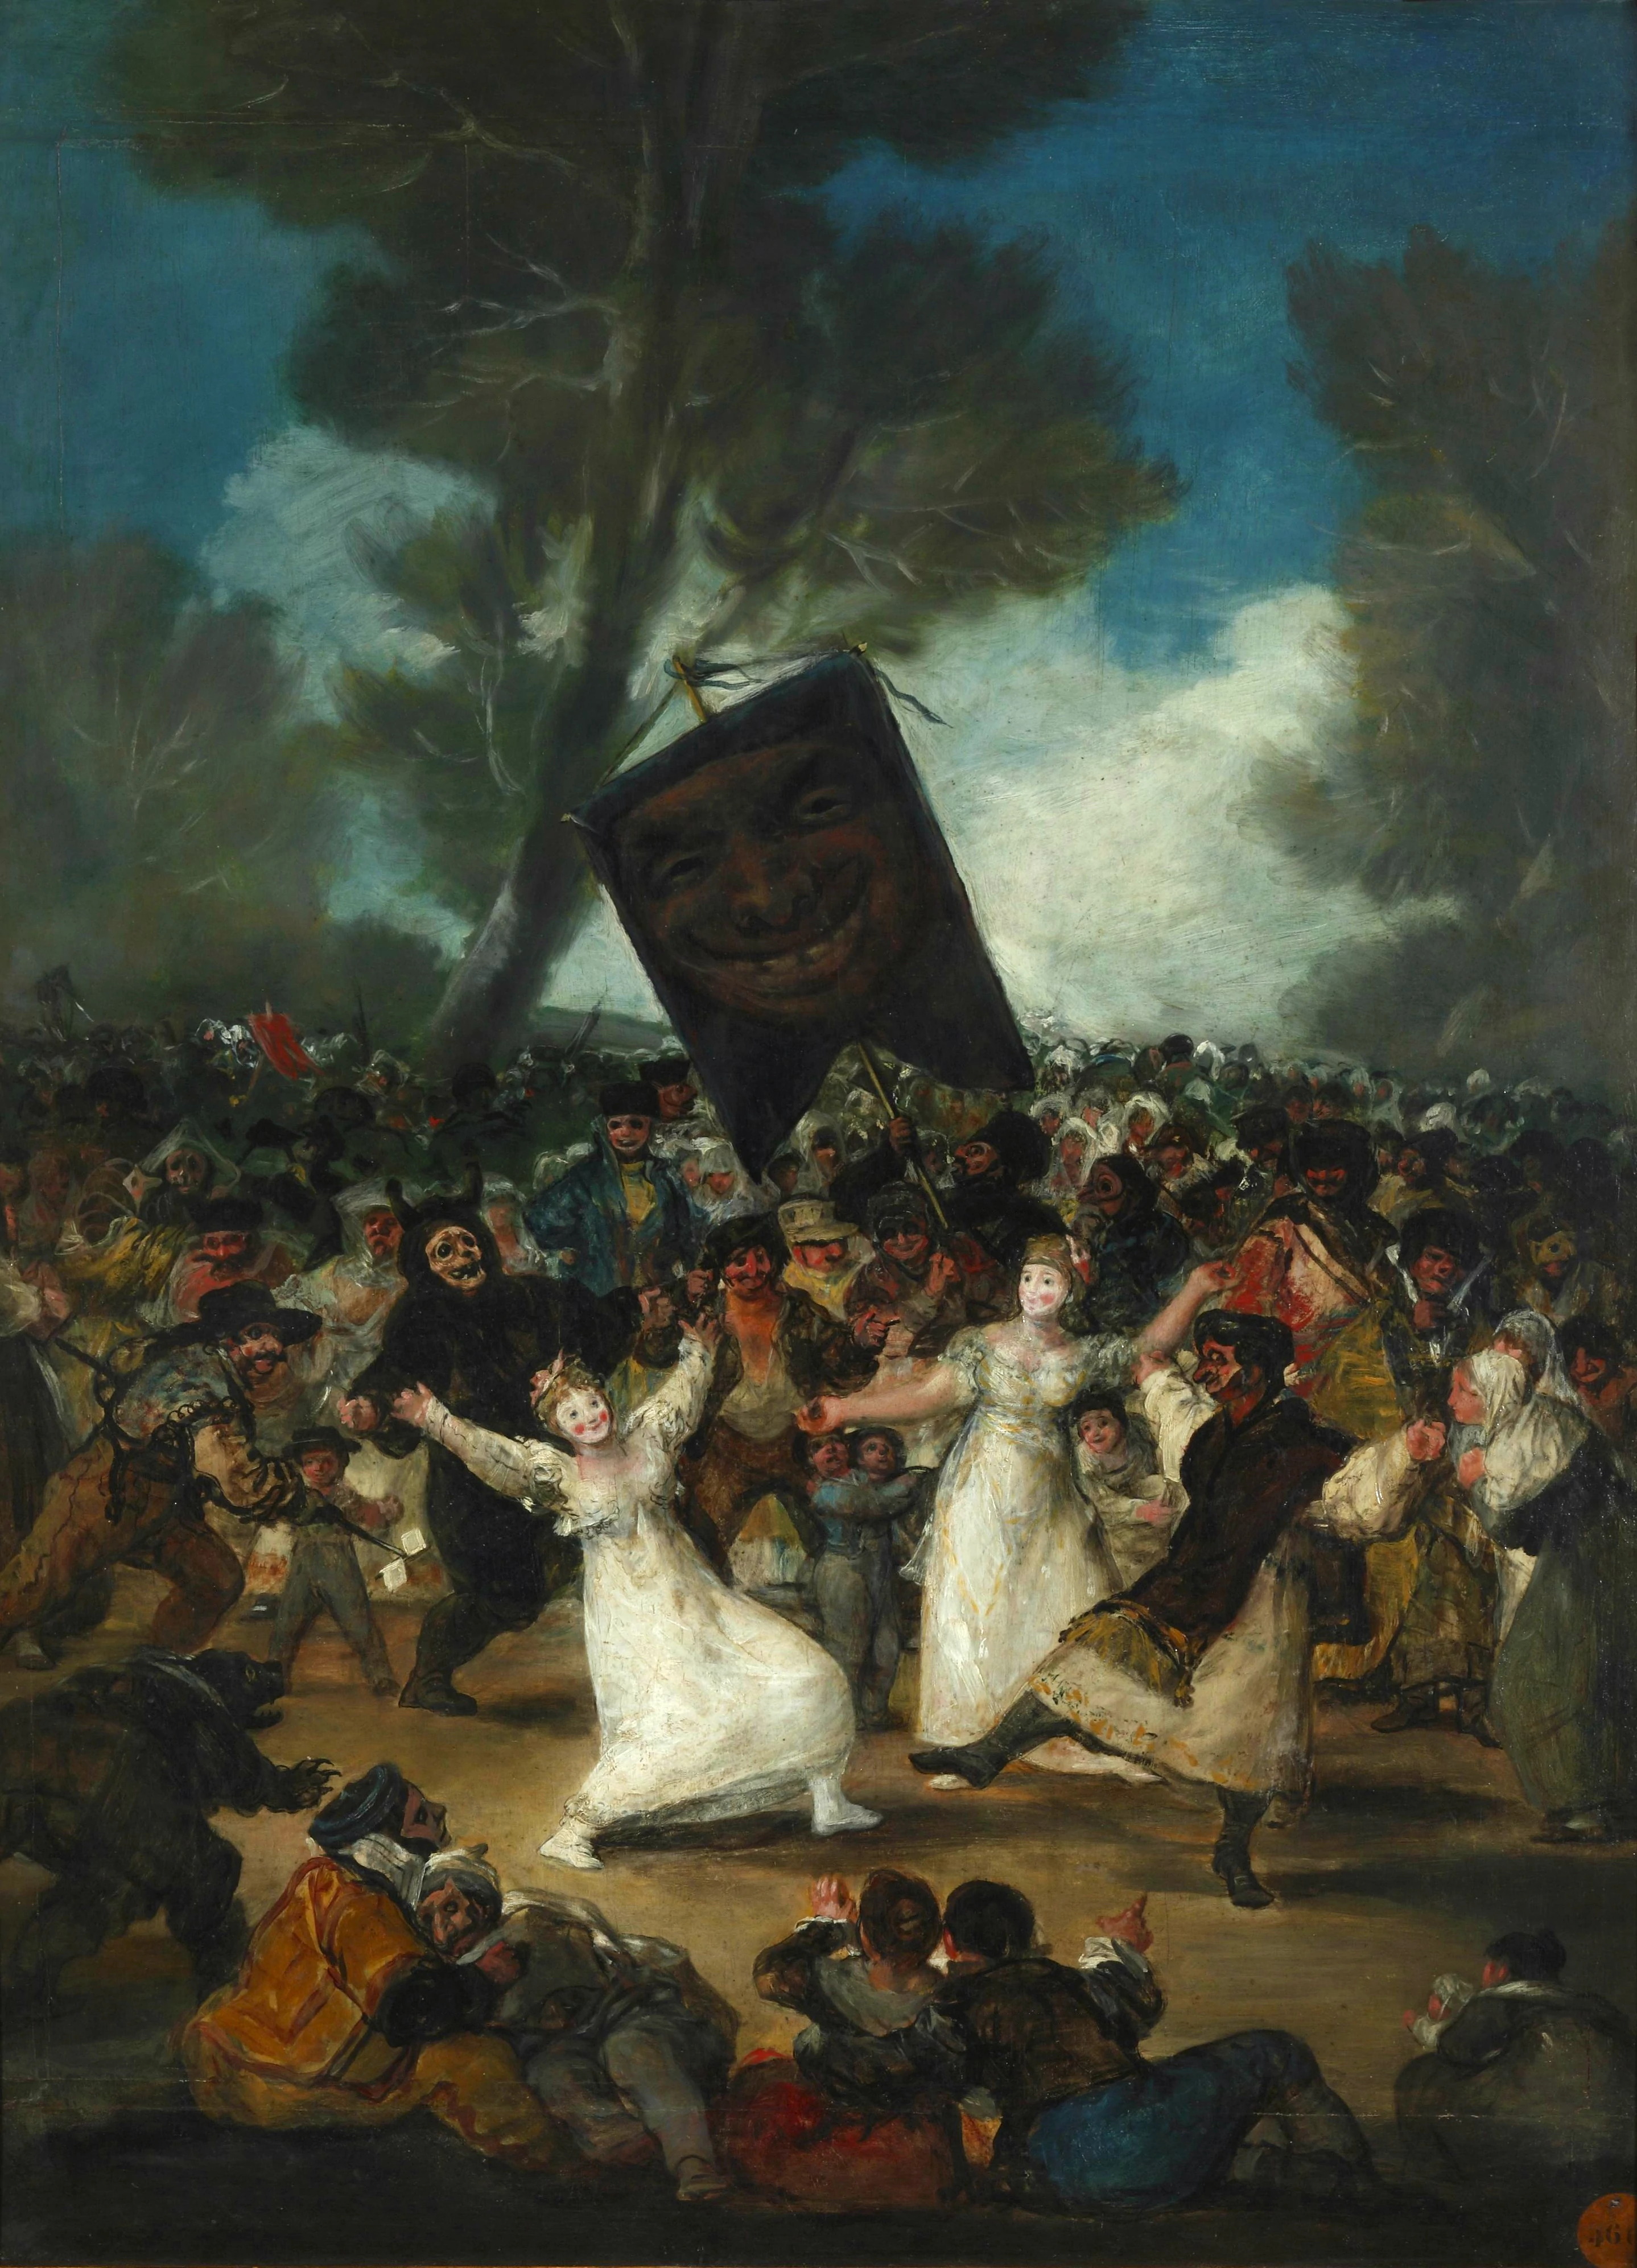 The Burial of the Sardine, Francisco de Goya y Lucientes